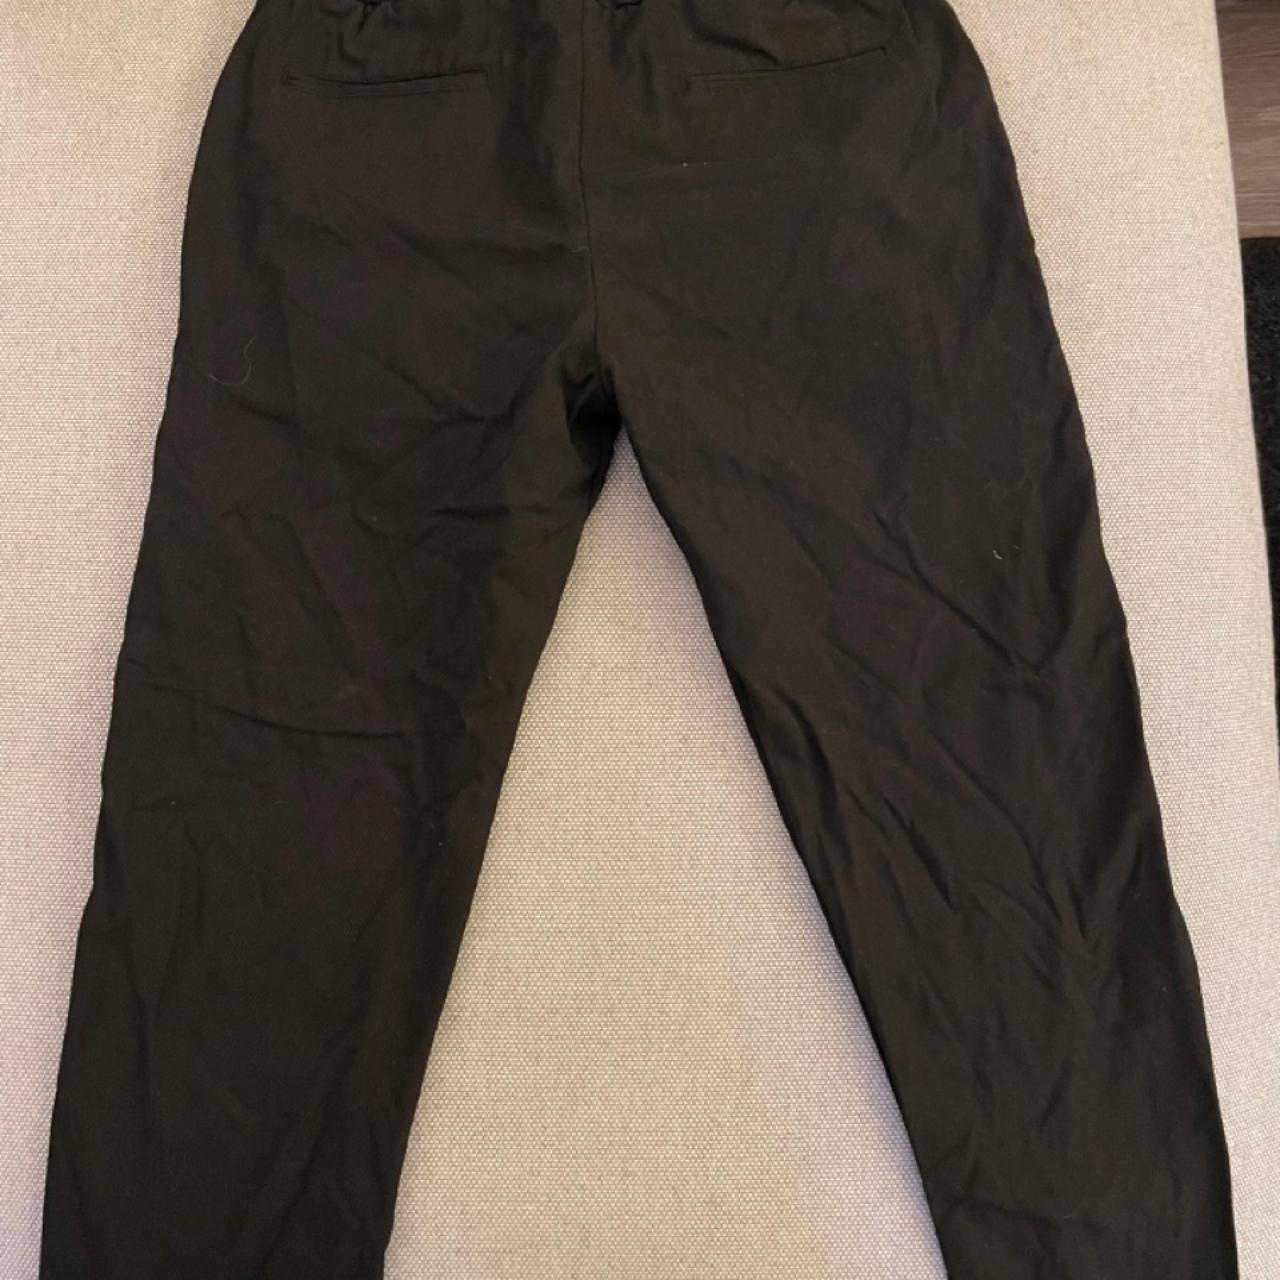 Product Image 3 - Percival Everyday Pants Black Twill

Elastic